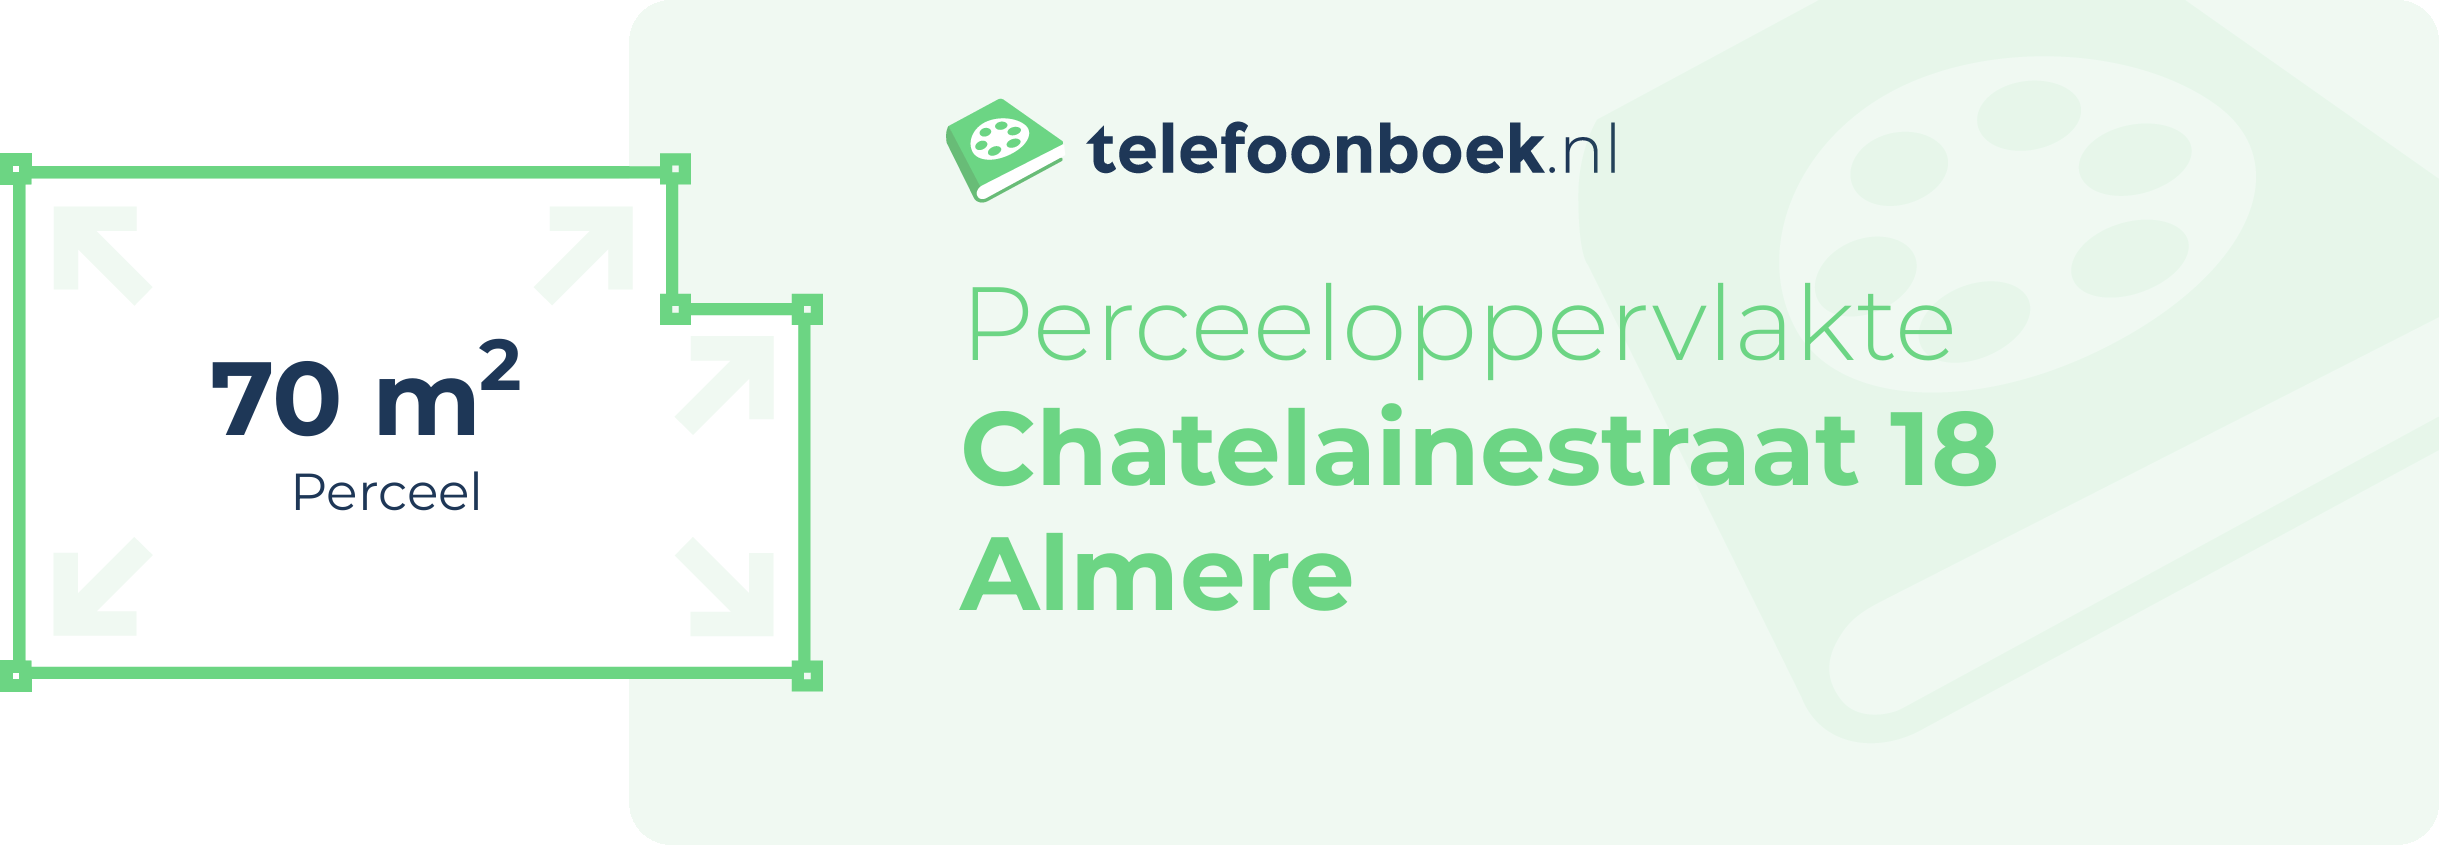 Perceeloppervlakte Chatelainestraat 18 Almere